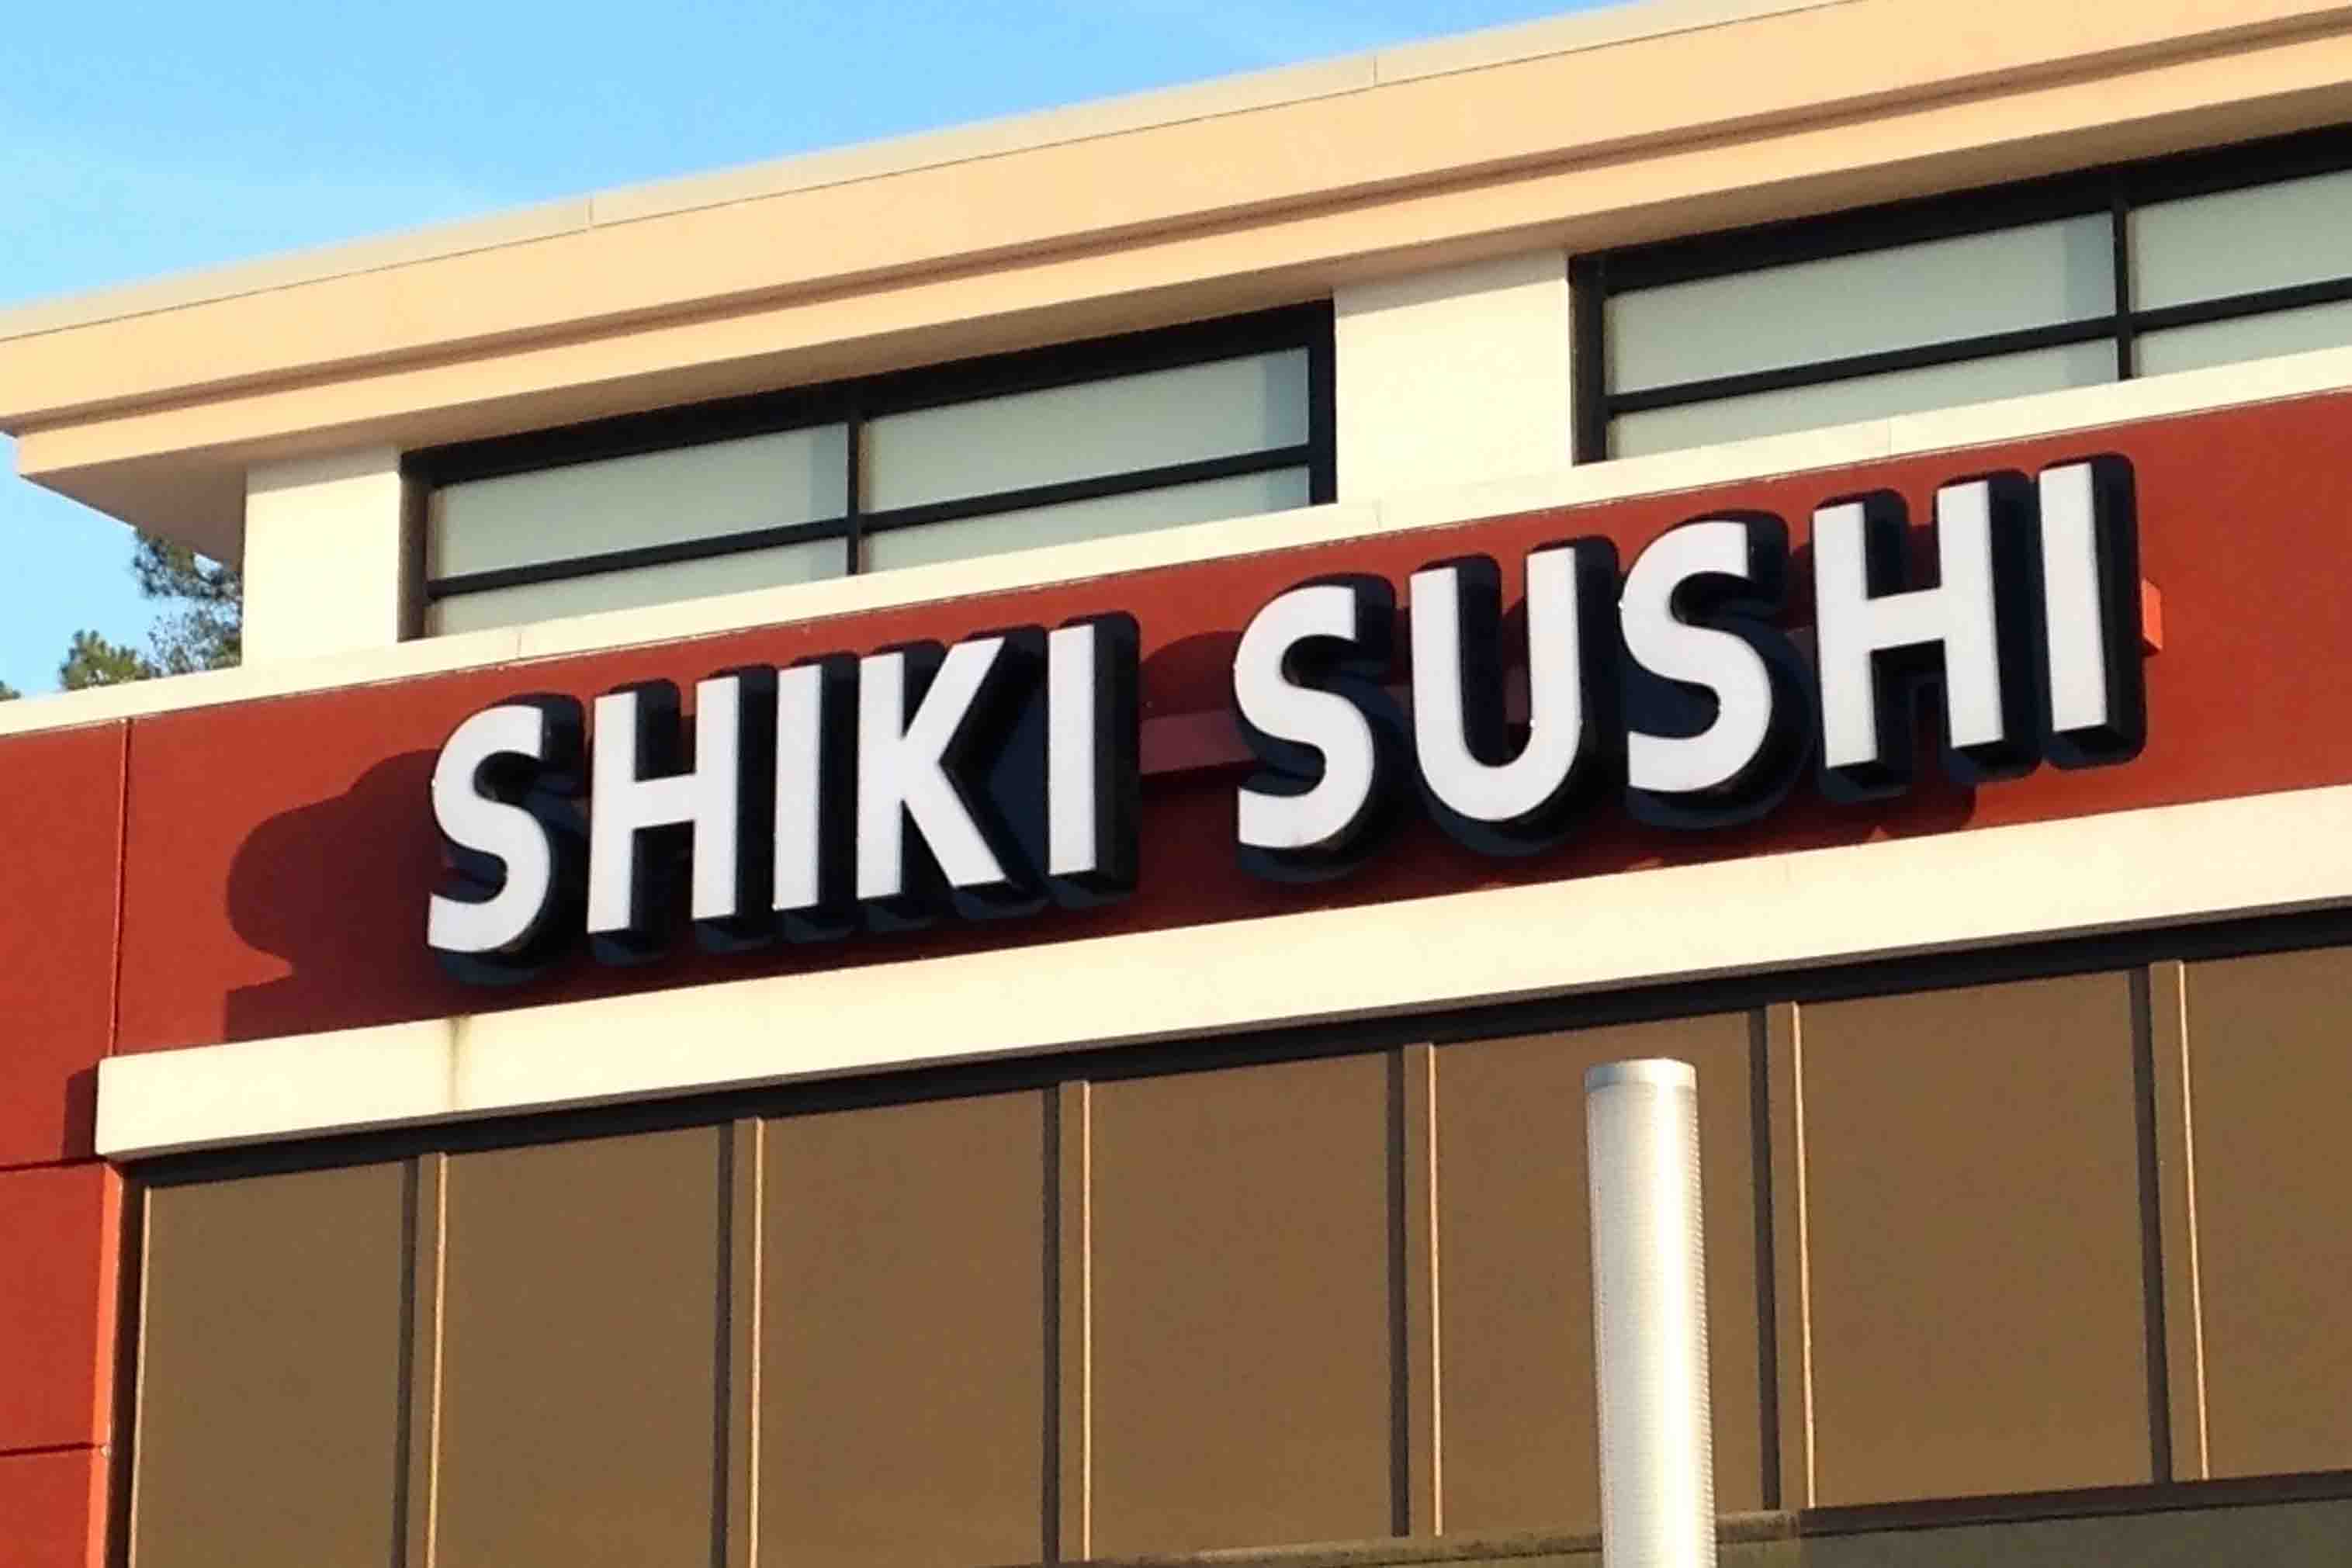 Shiki sushi for the win!